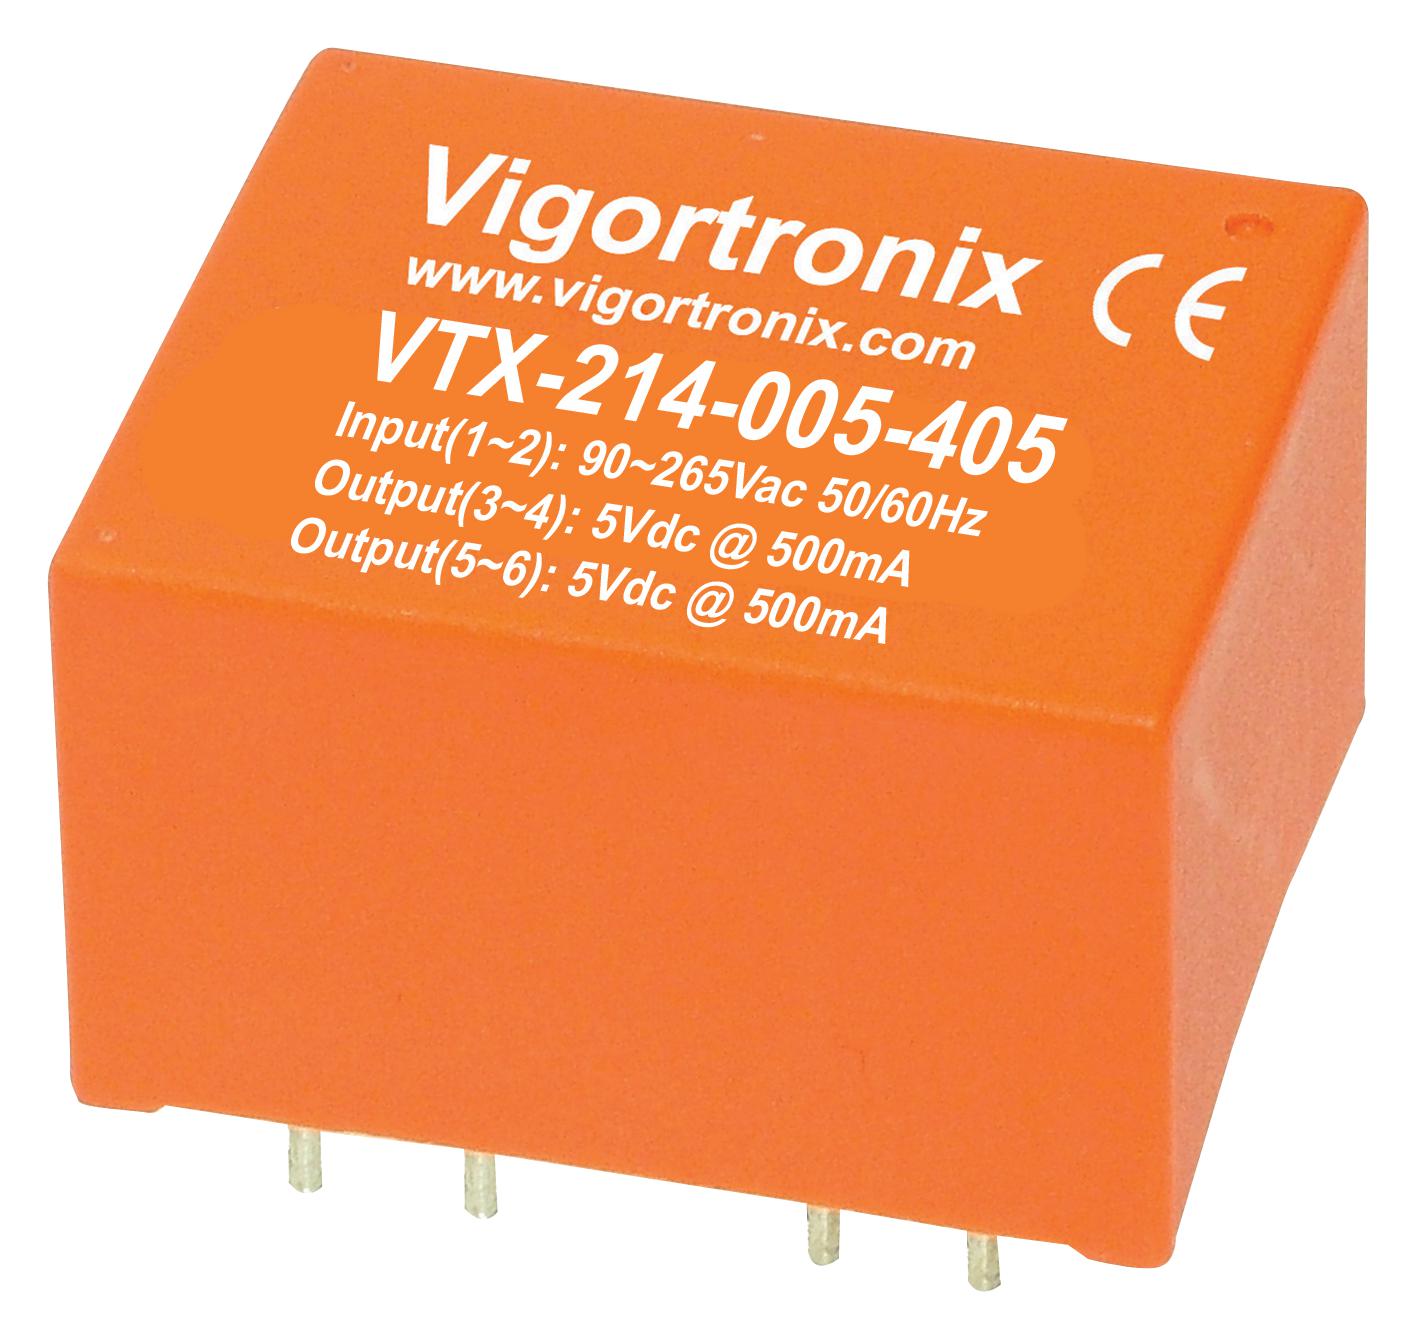 VTX-214-005-0315 POWER SUPPLY, AC-DC, 3.3V, 0.757A VIGORTRONIX